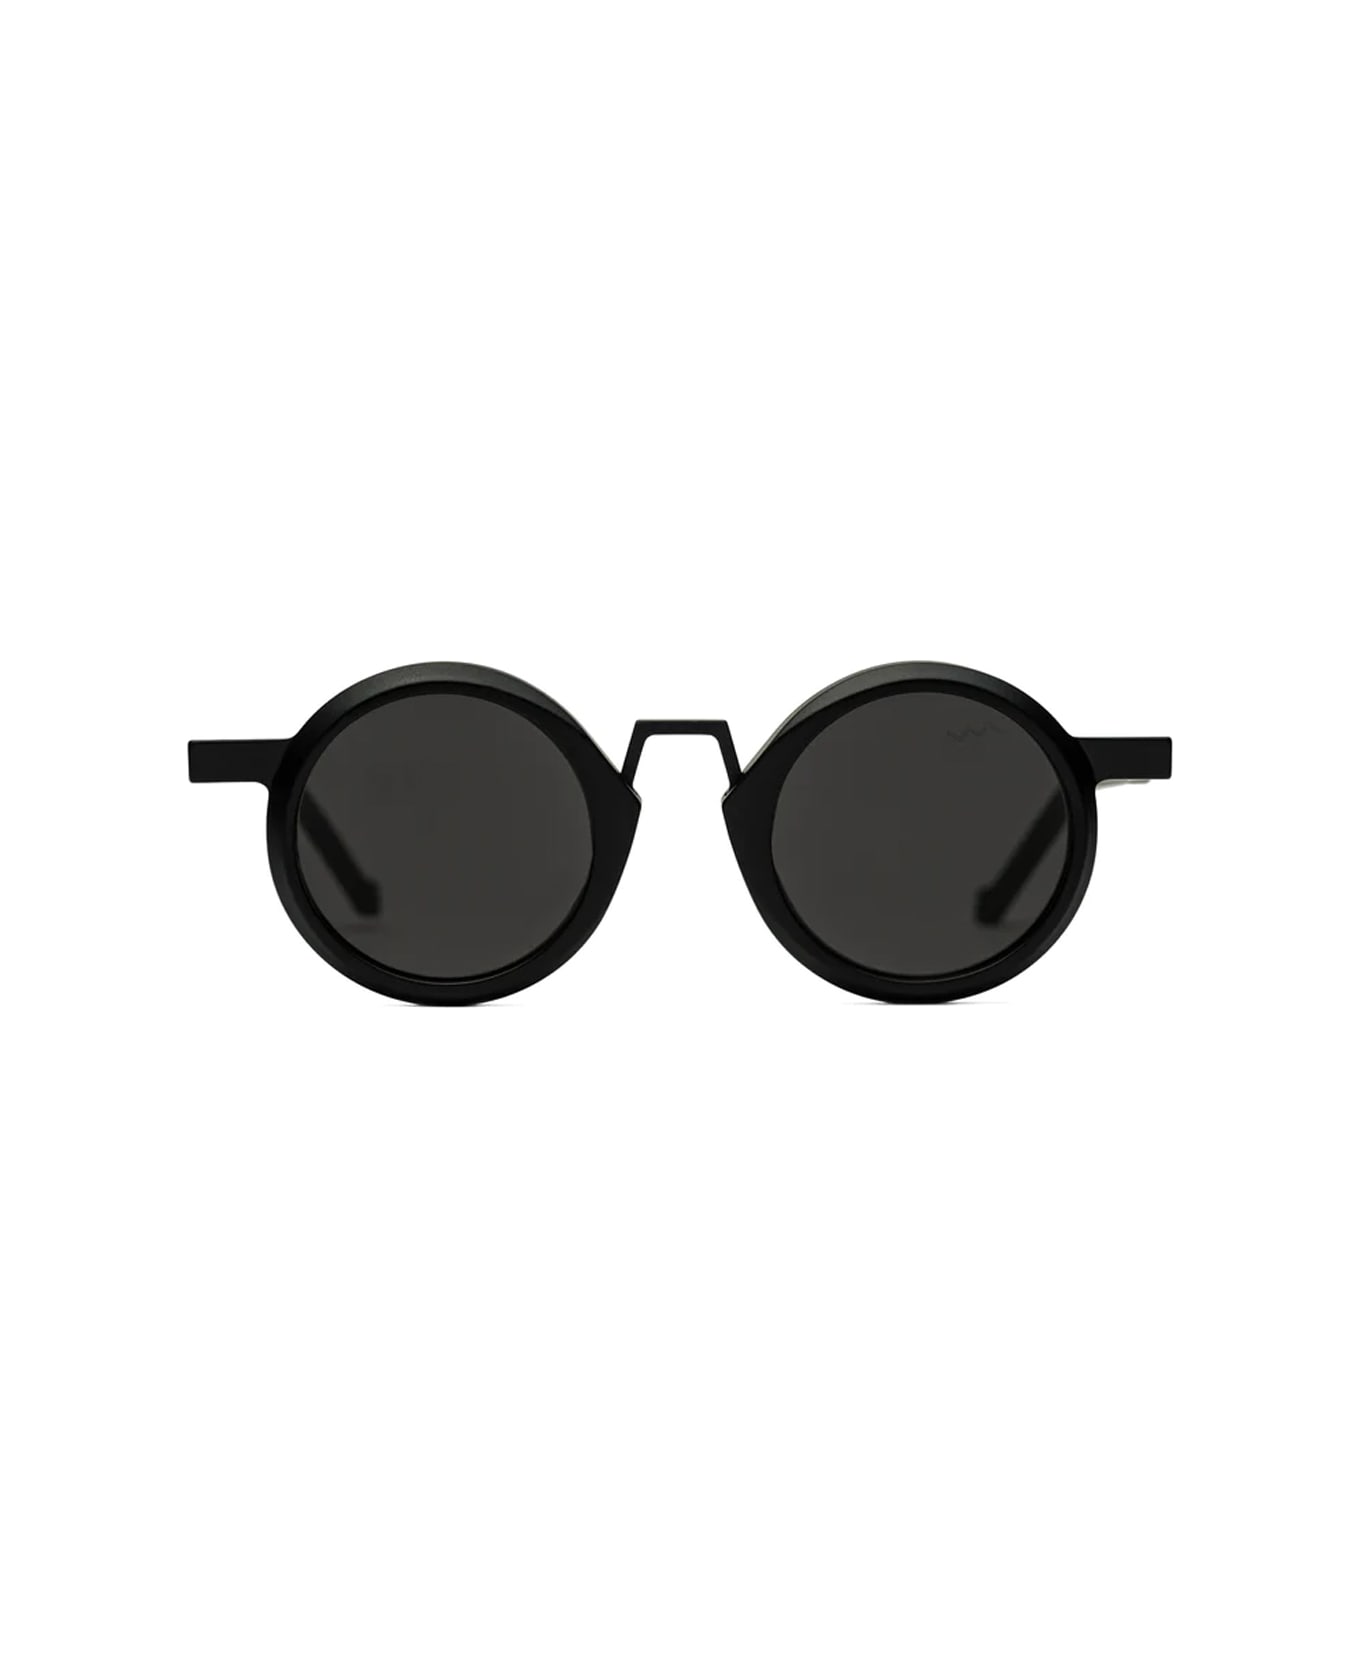 VAVA Wl0044 Black Sunglasses - Nero